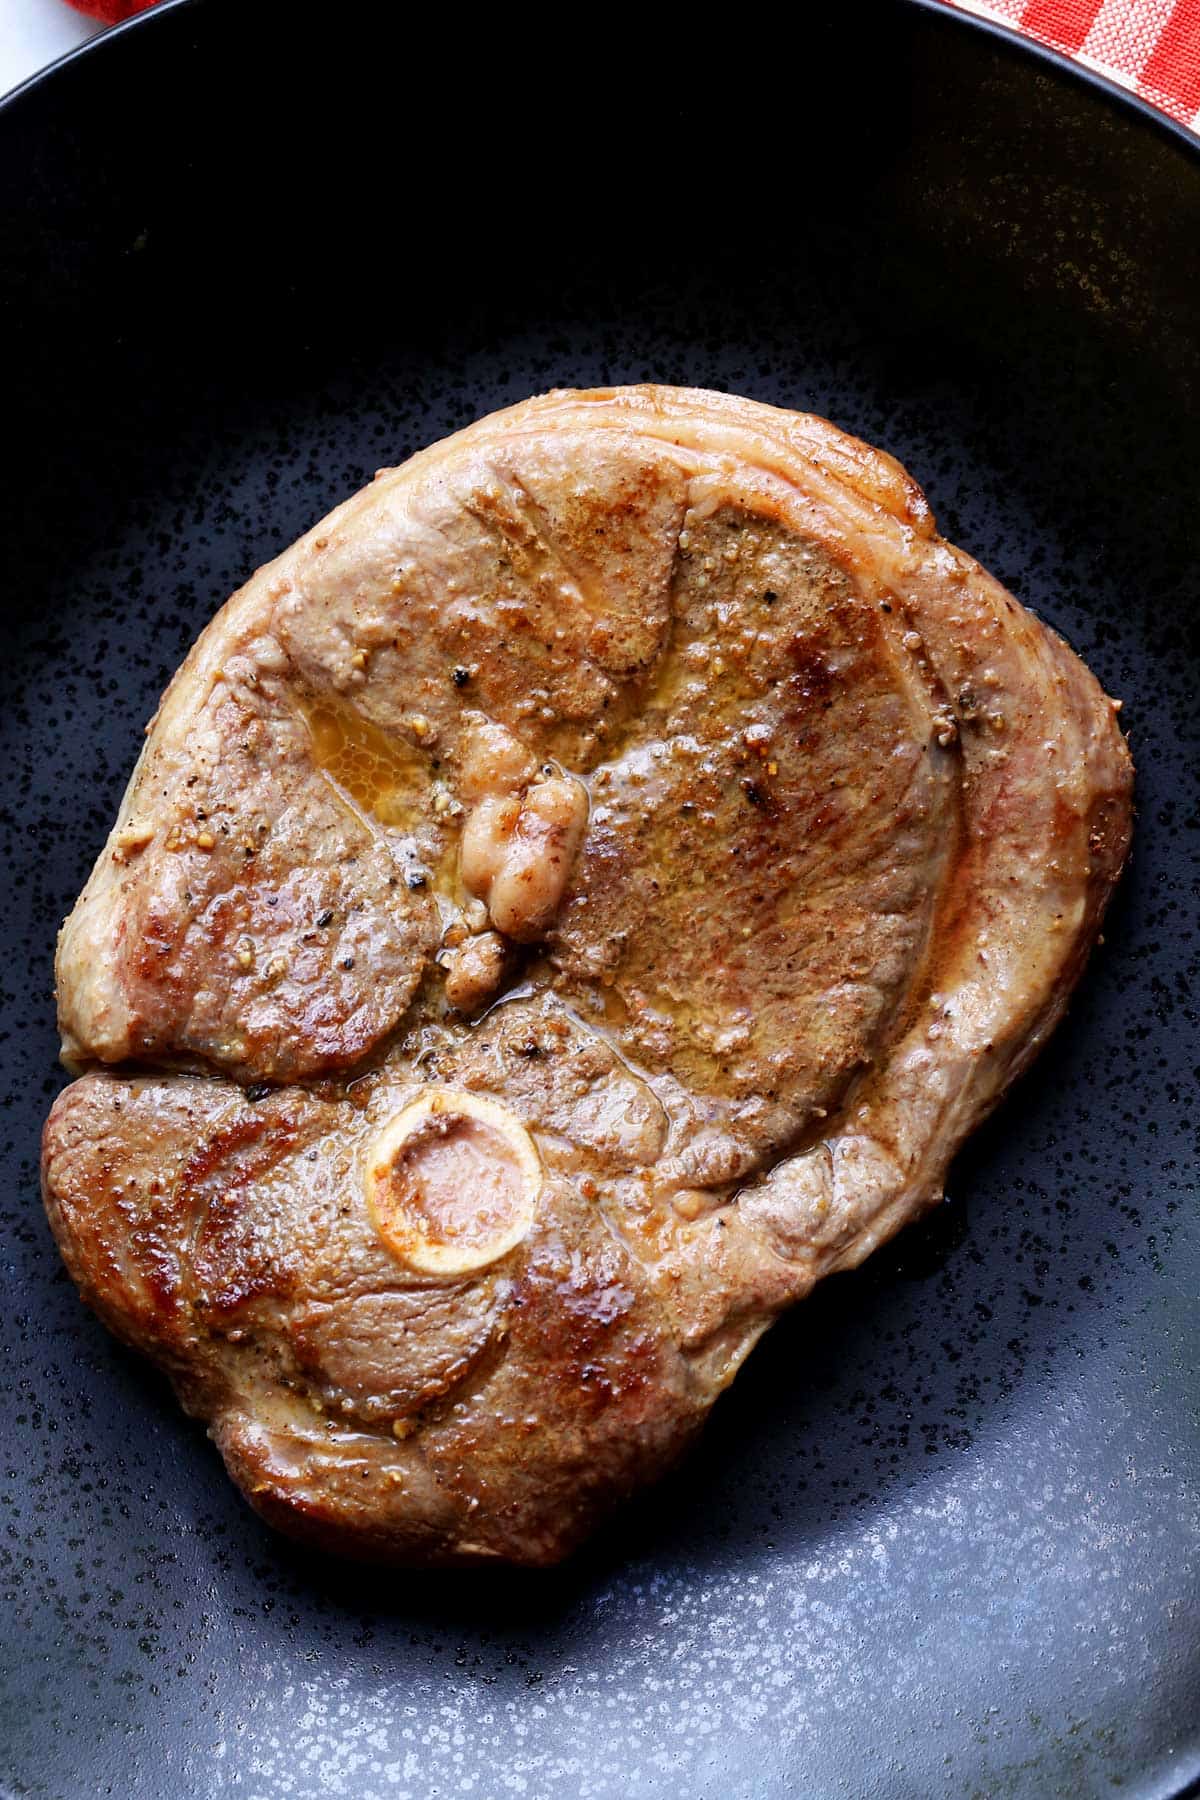 Lamb steak served on a dark plate.